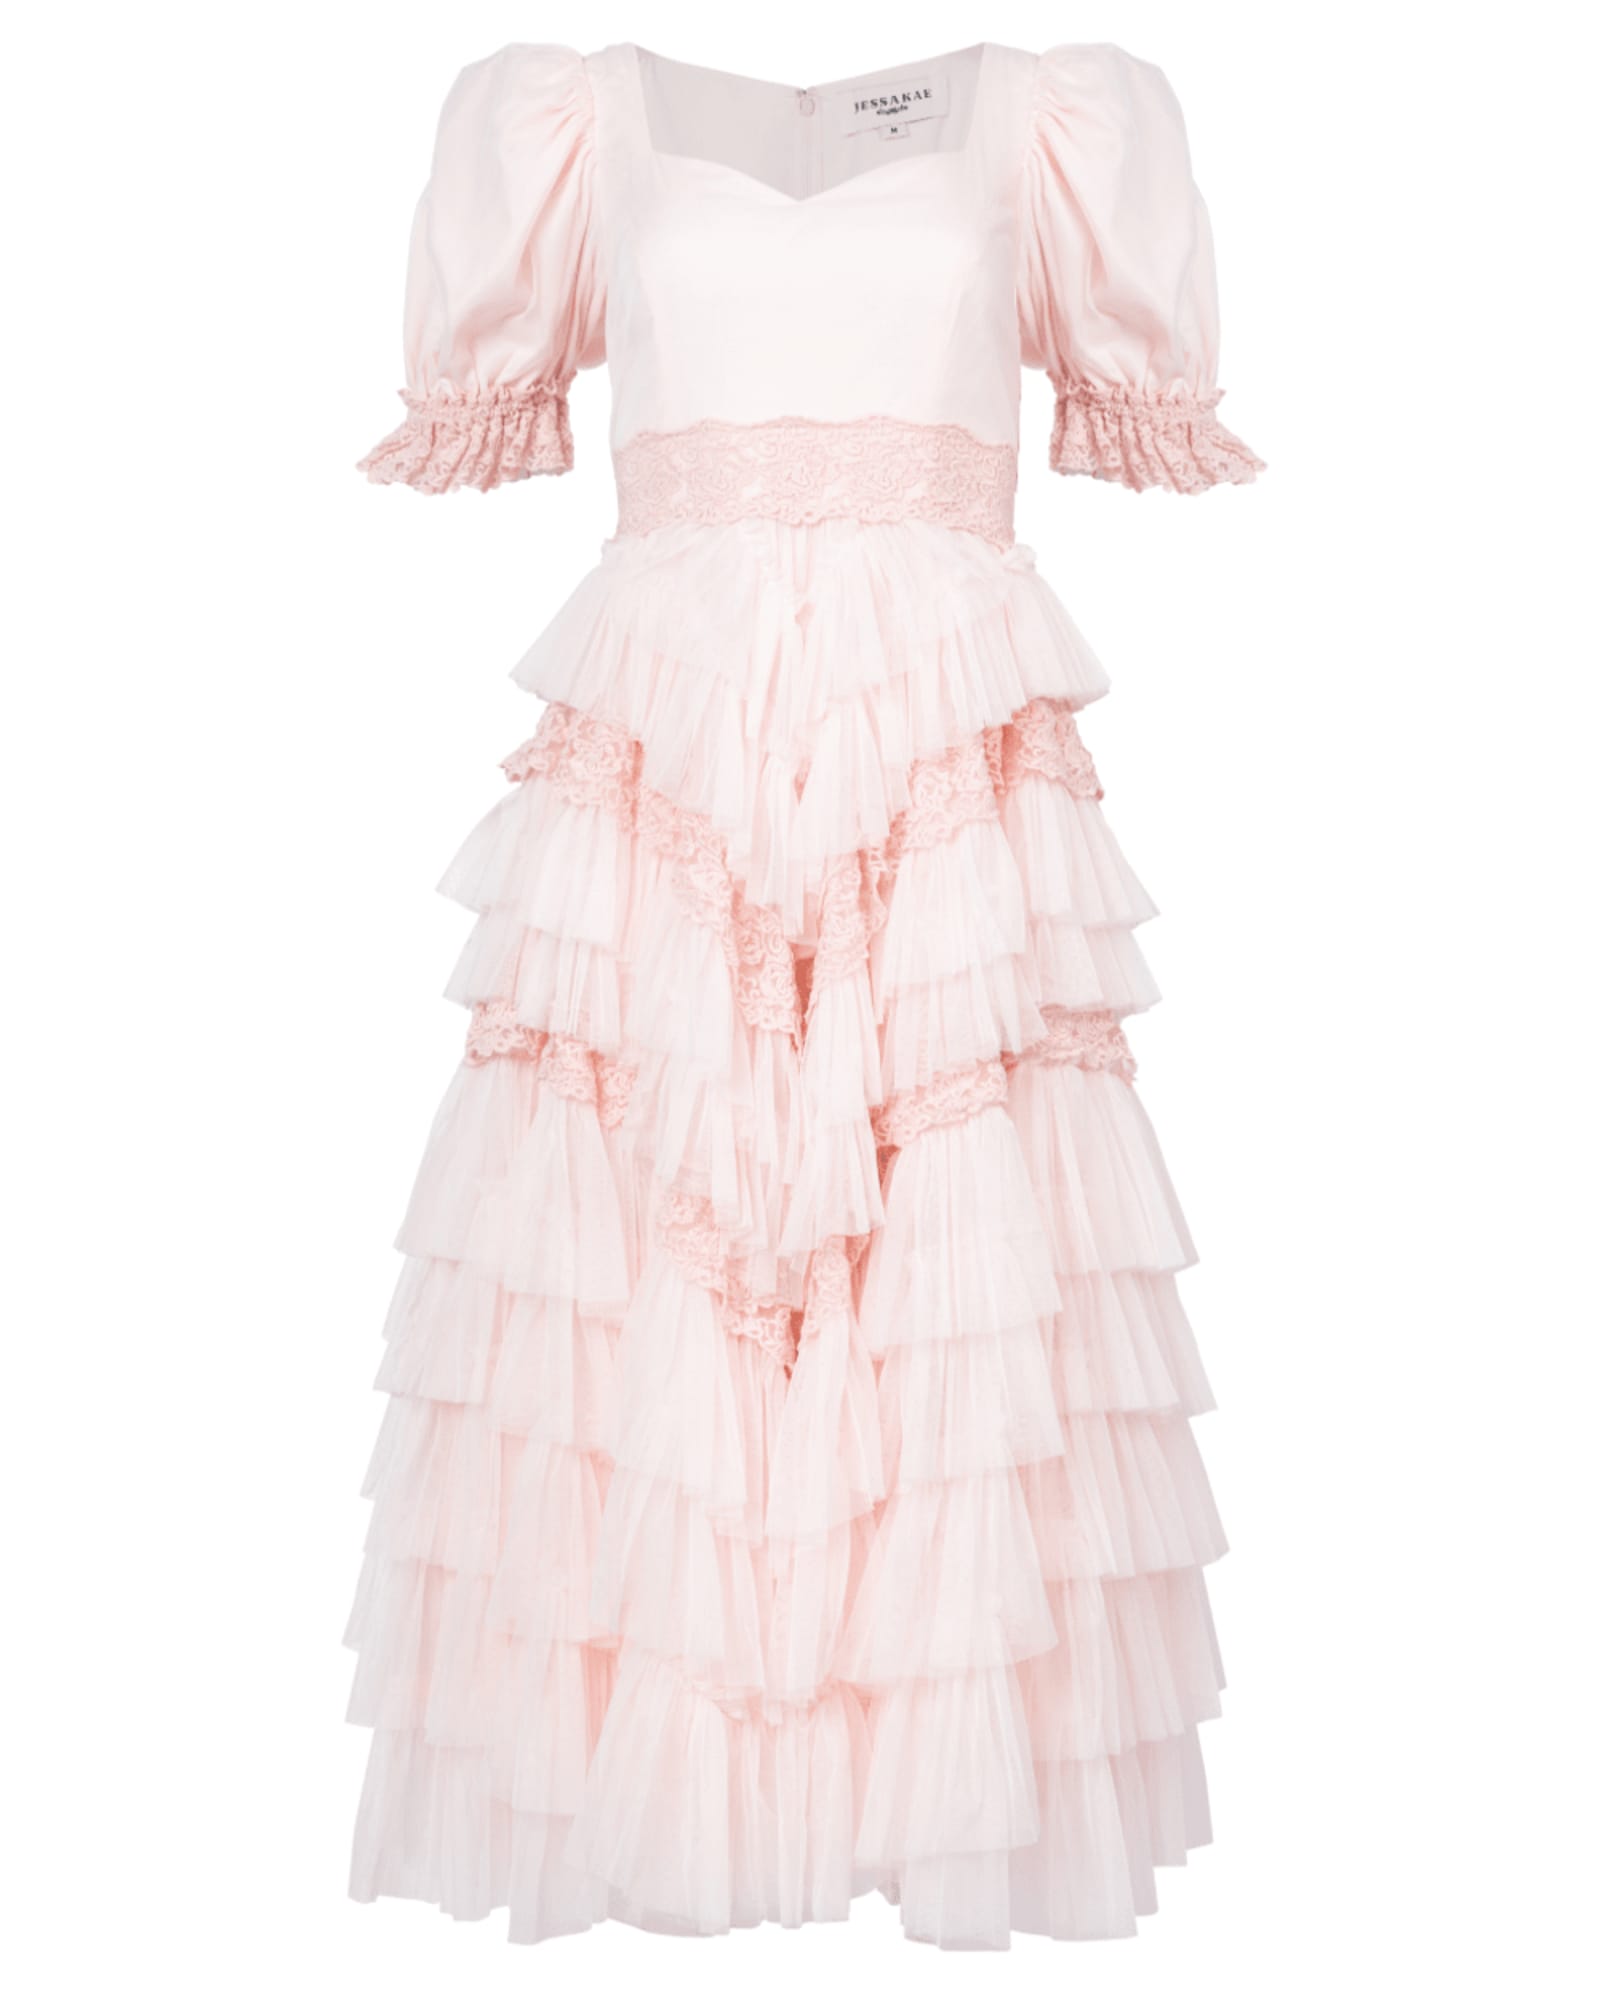 Thumbelina Dress | Pink